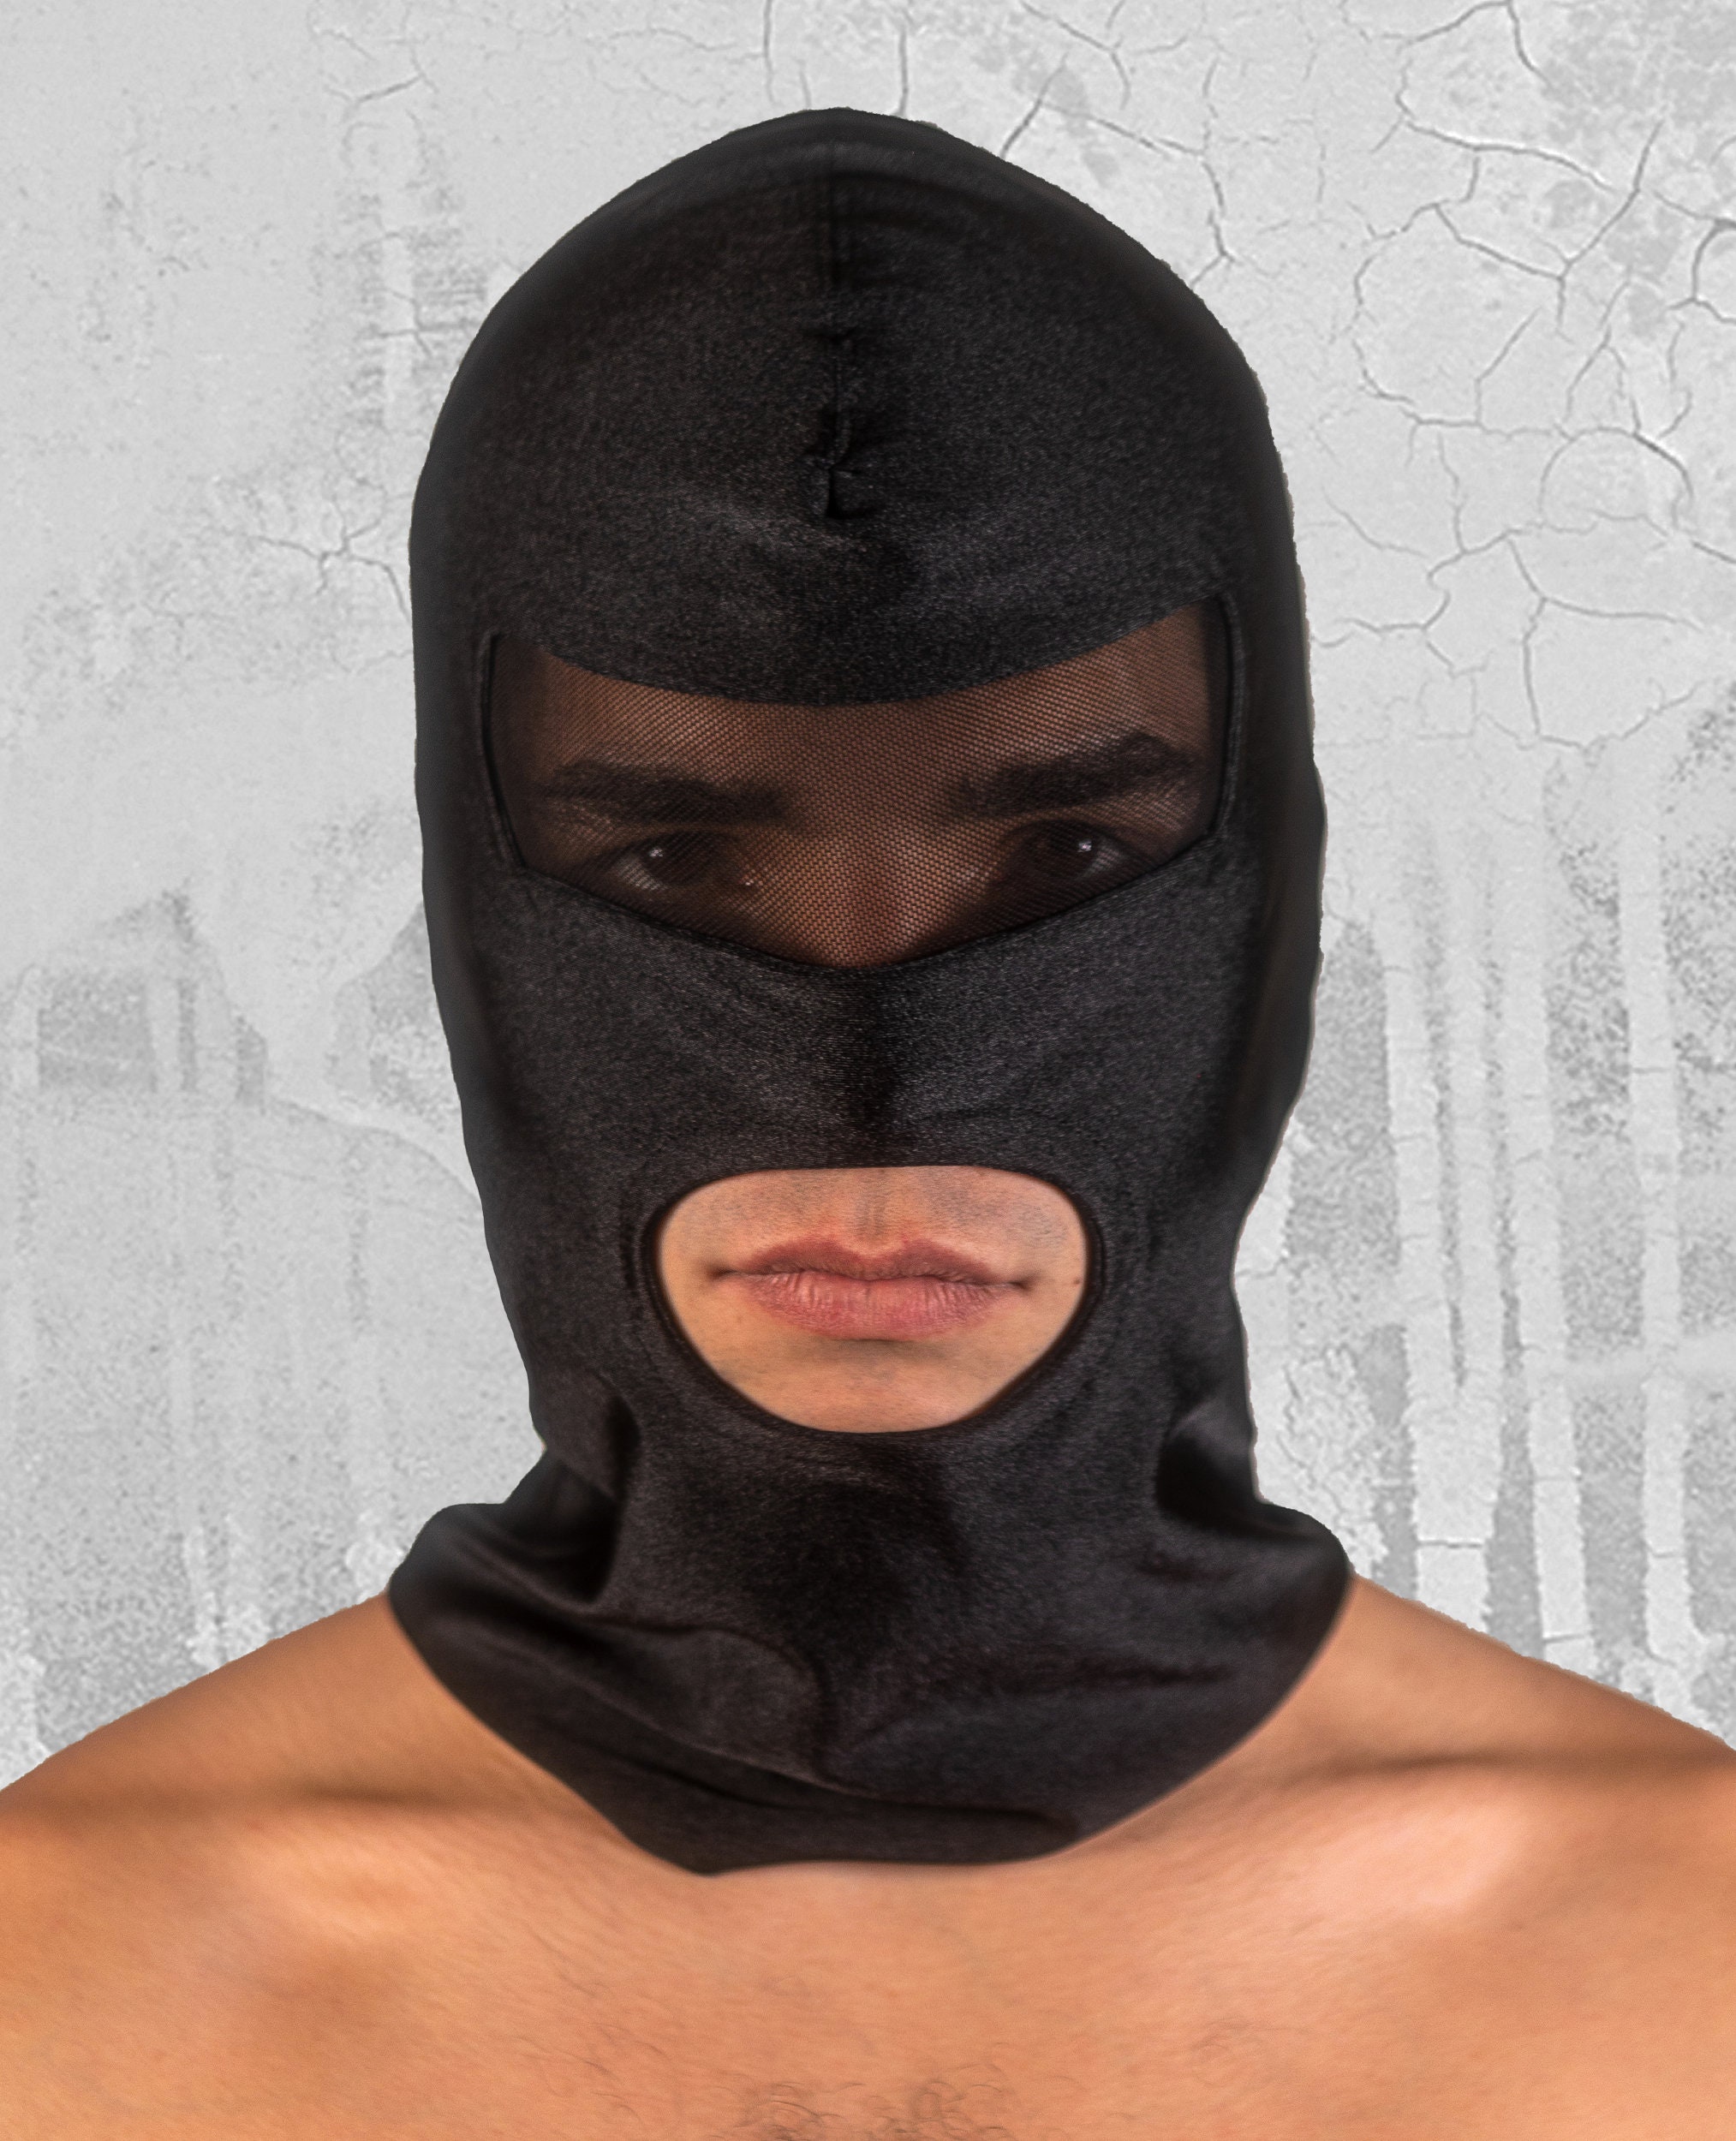 BALACLAVA Unisex Adult Eyes & Mouth Open Headgear Mask Black | Etsy